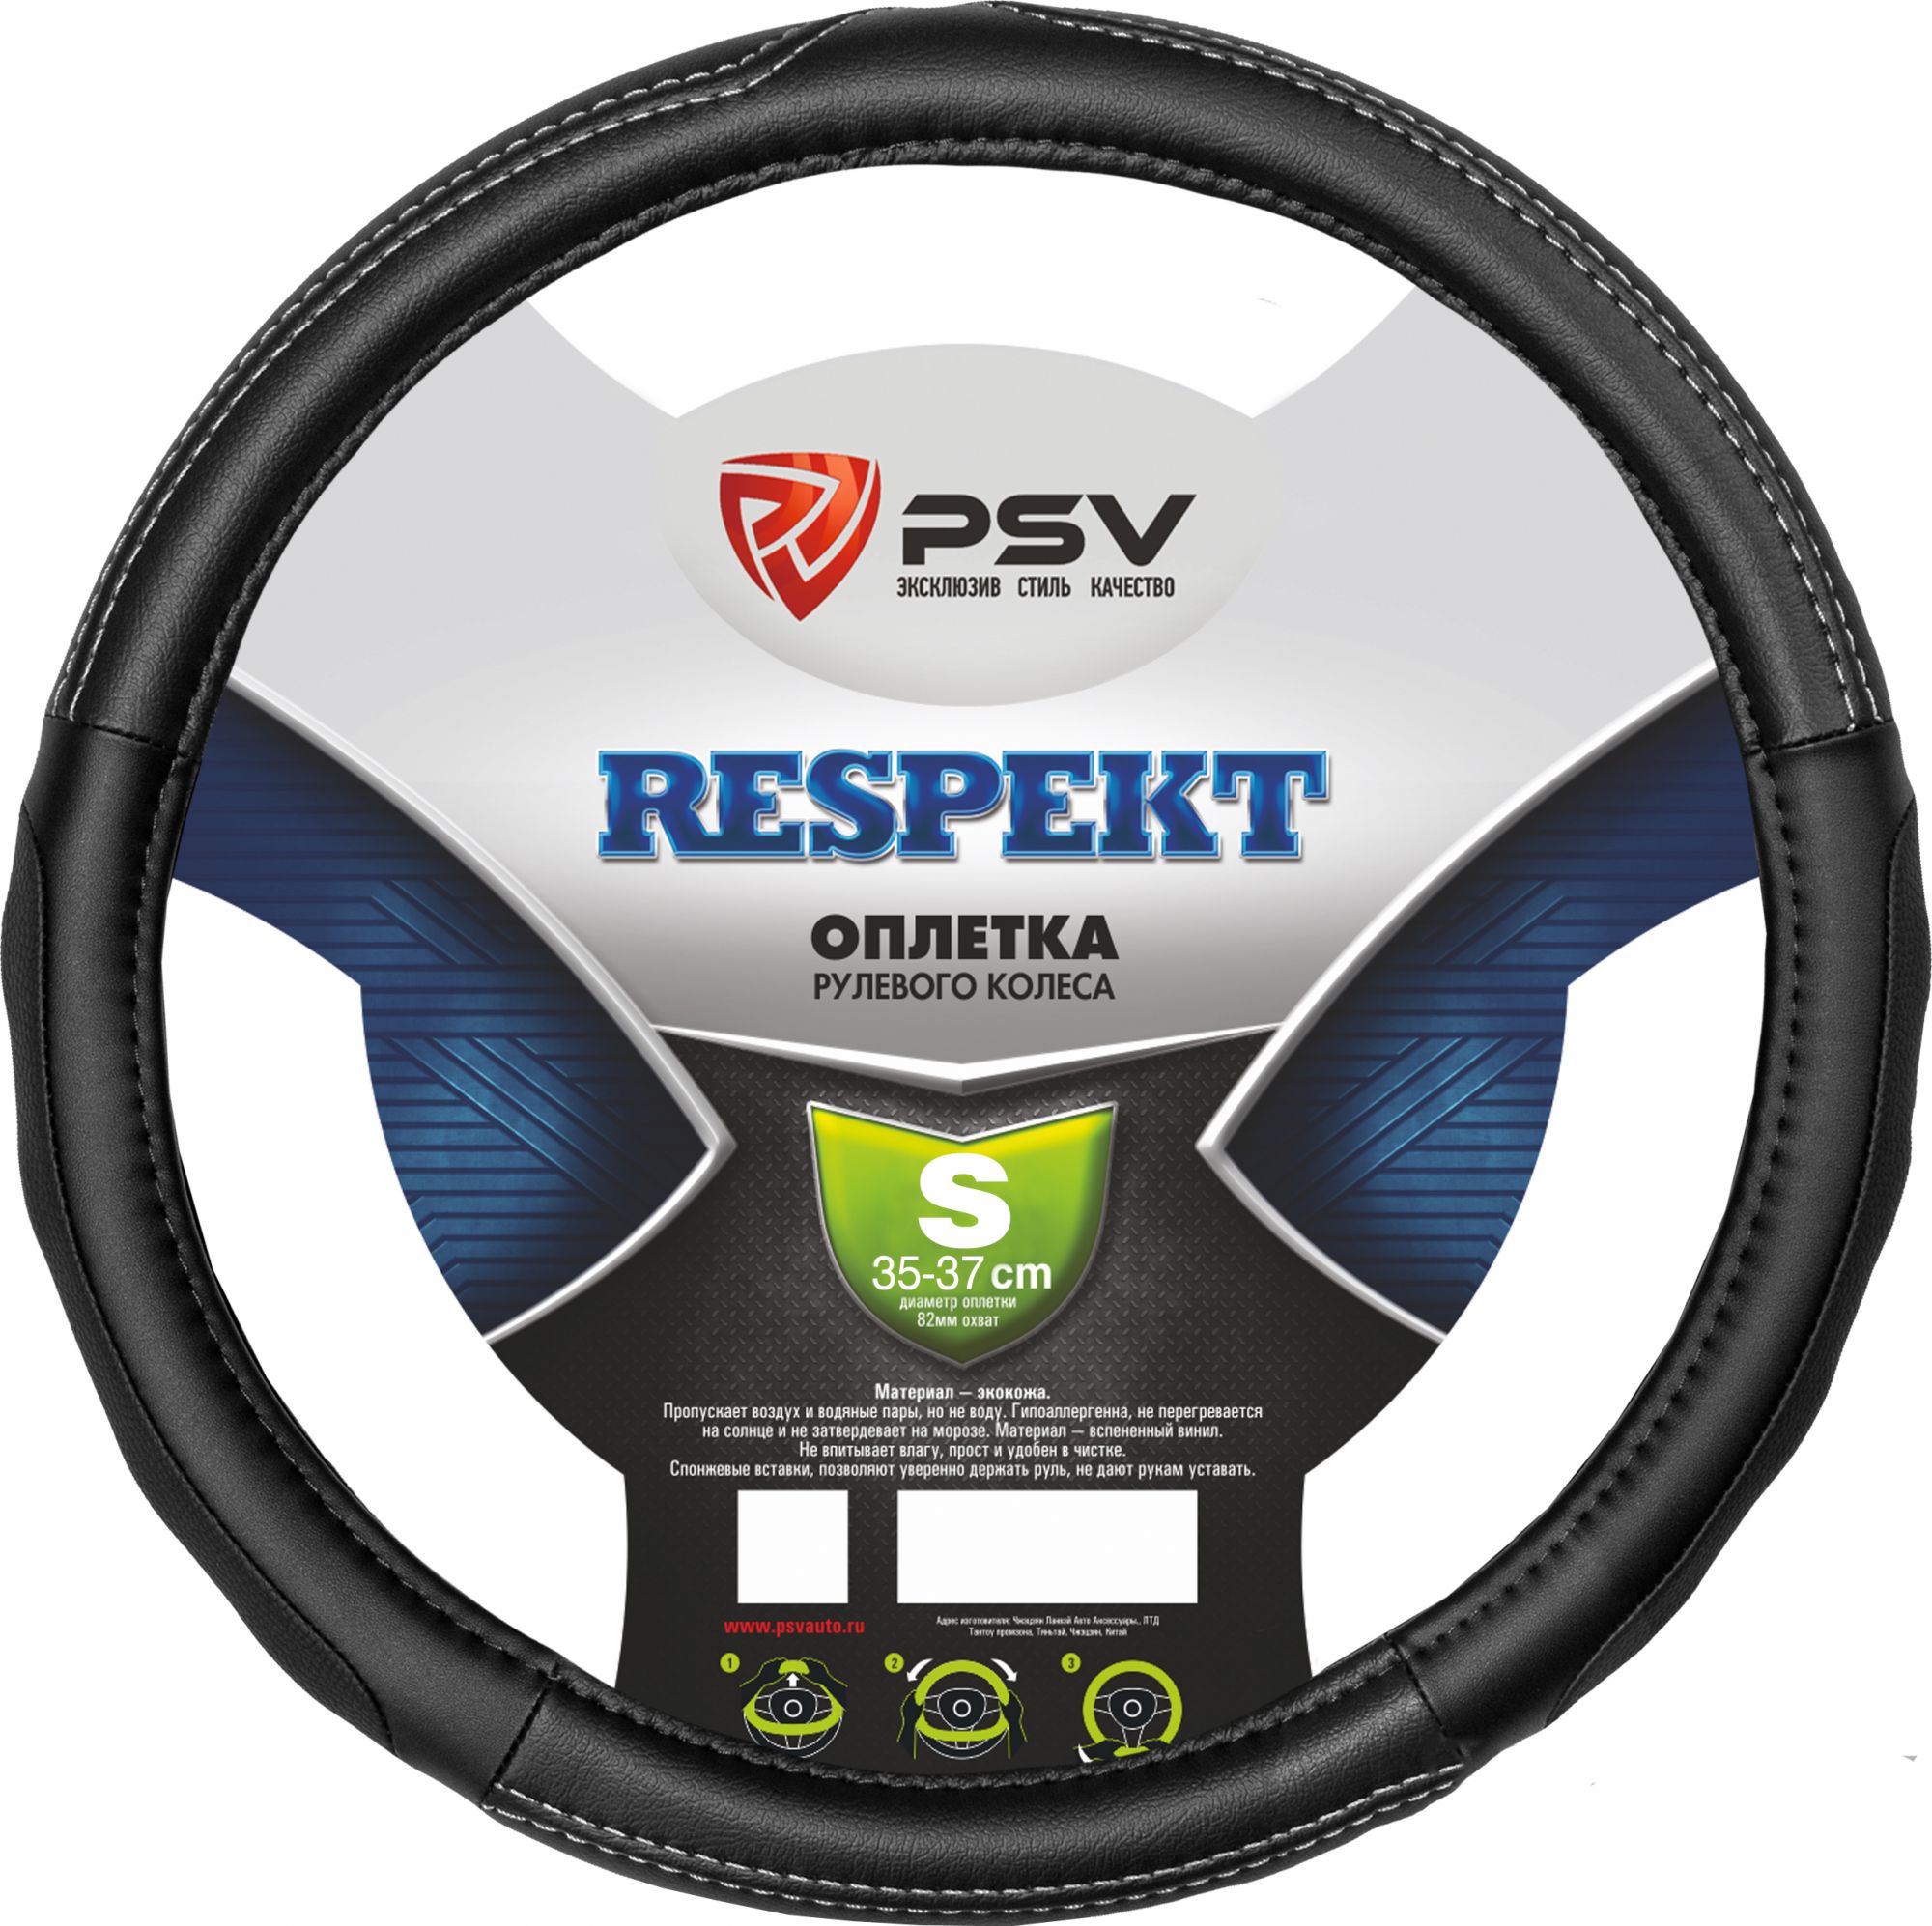 Оплётка на руль PSV RESPEKT (Черный) S